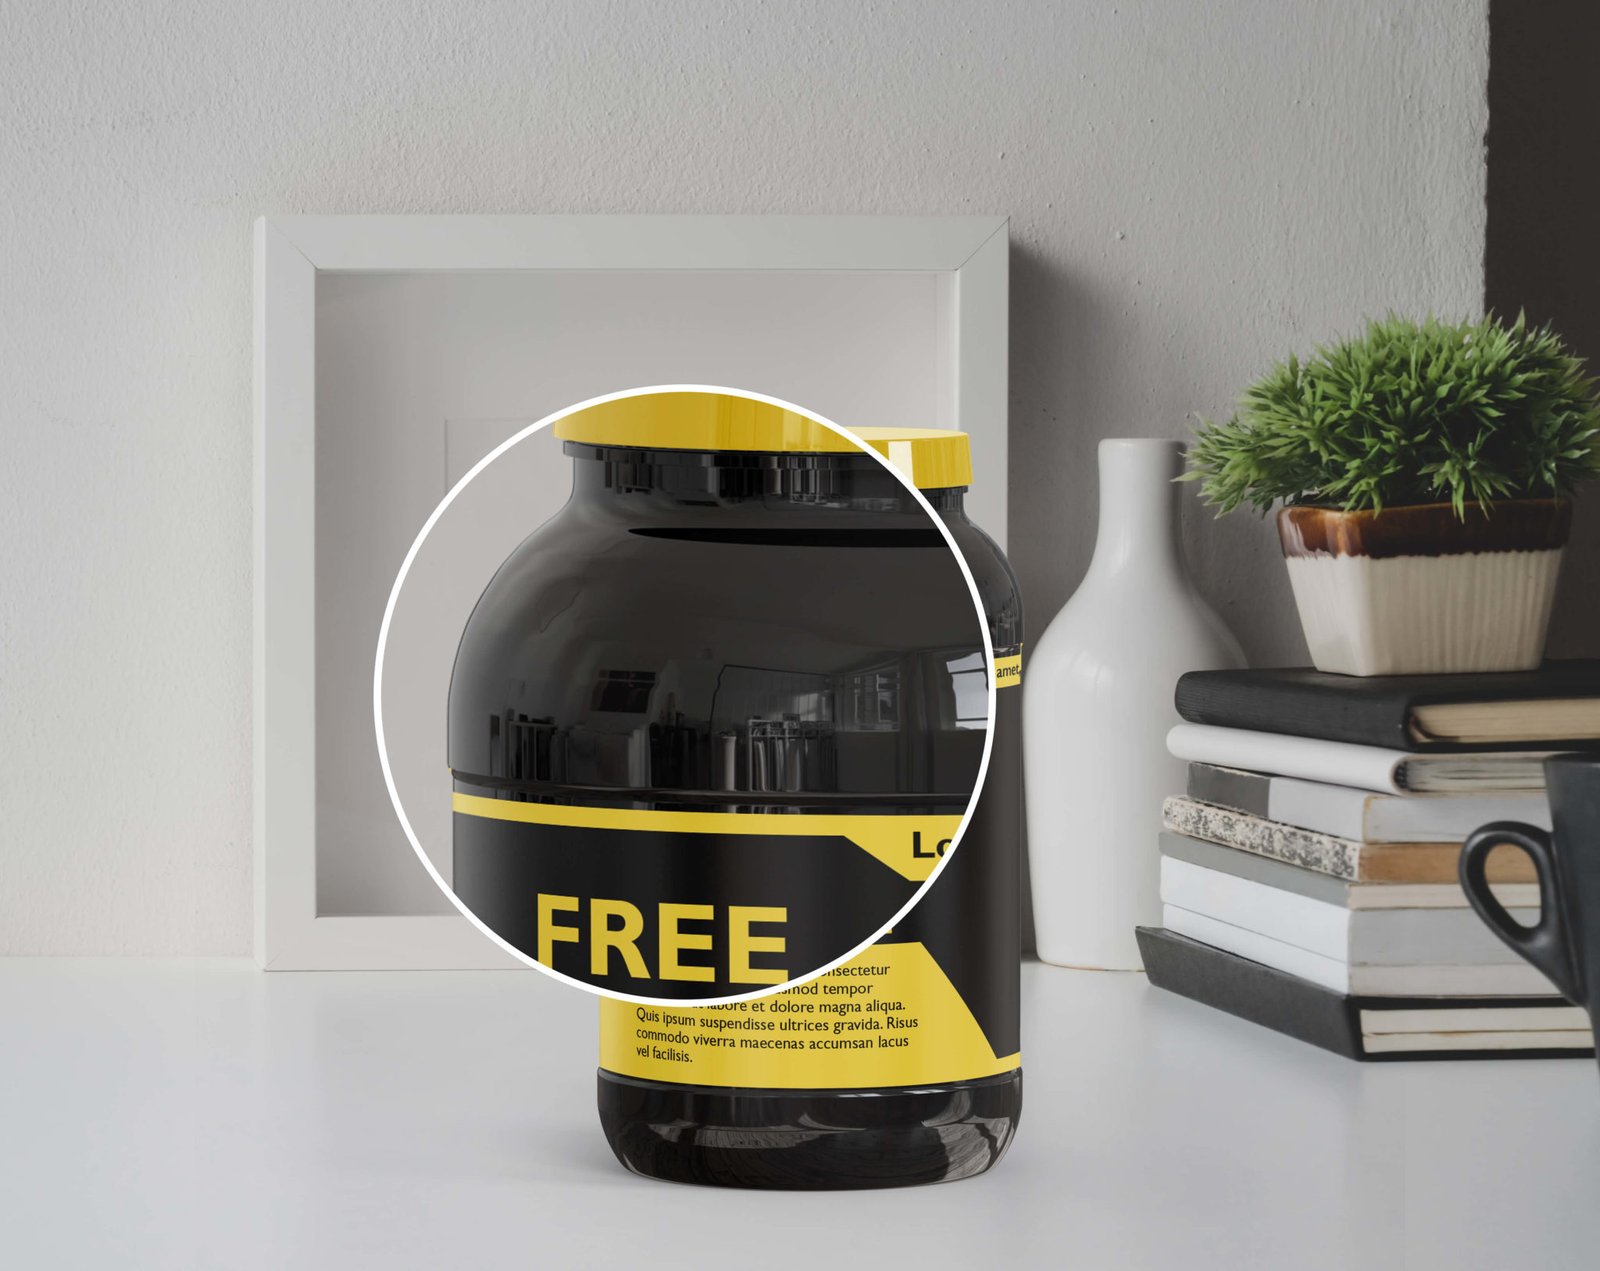 Download Free Plastic Jar Mockup Free PSD Template - Mockup Den